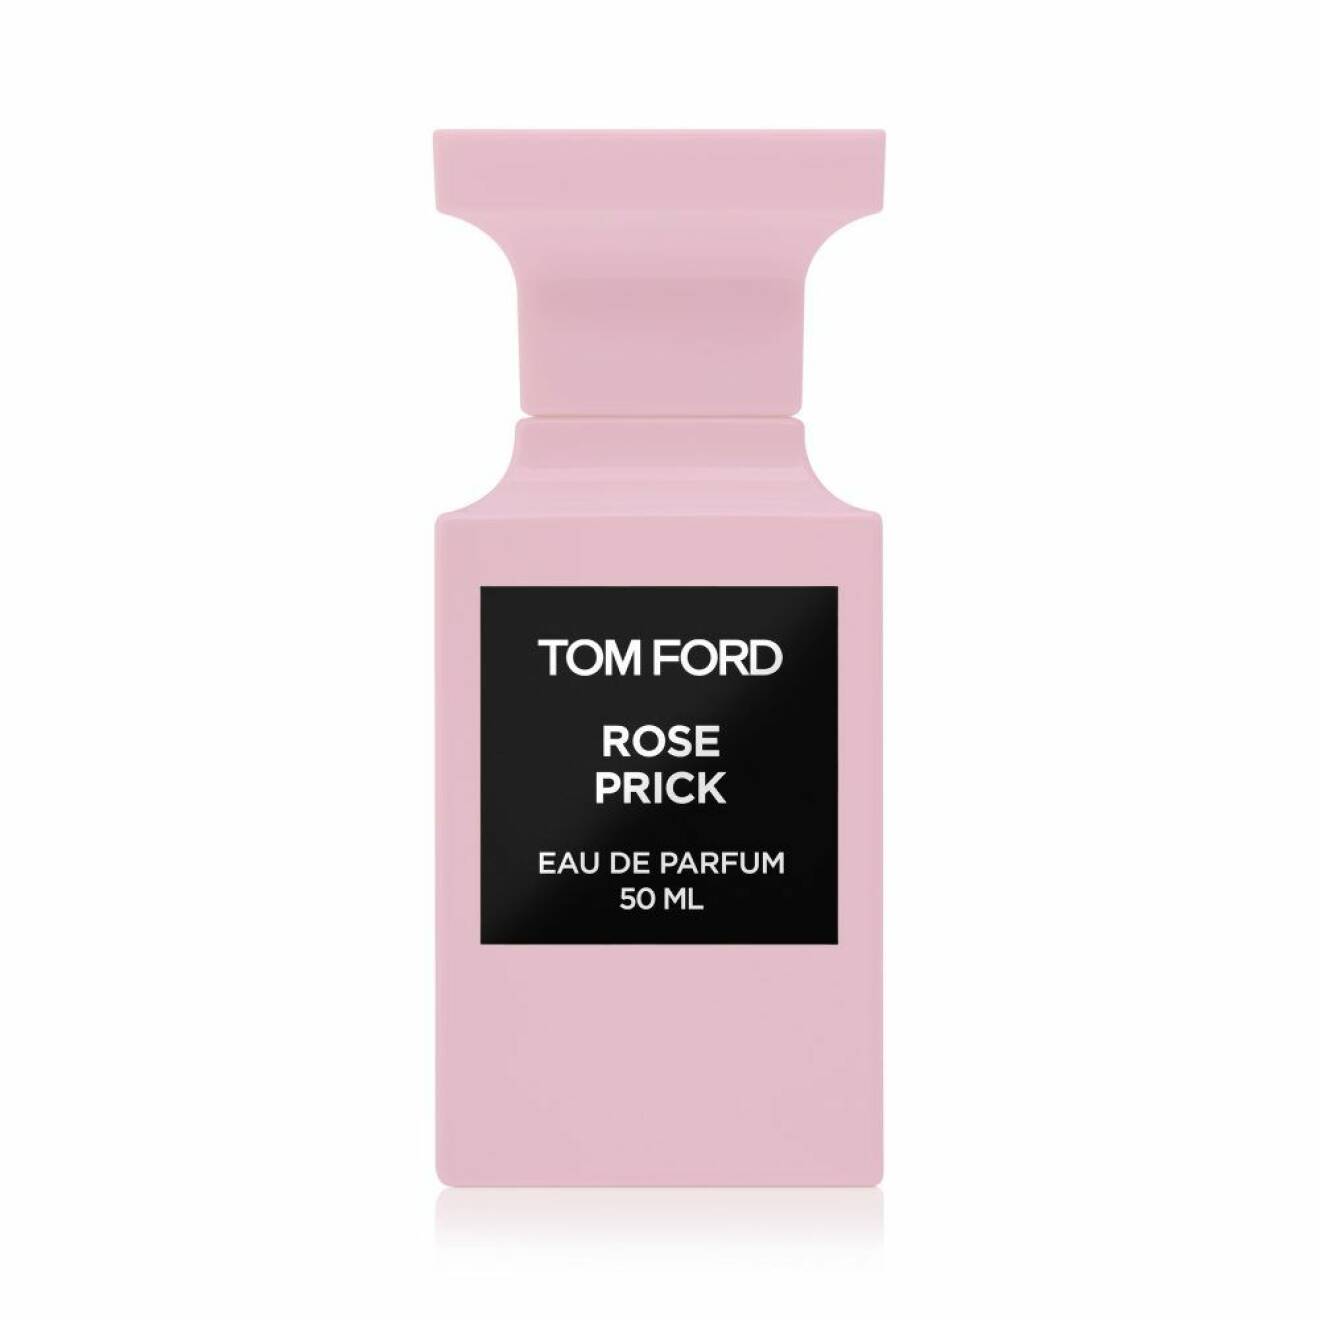 Parfym med doft av ros – Tom Fords Rose Pric